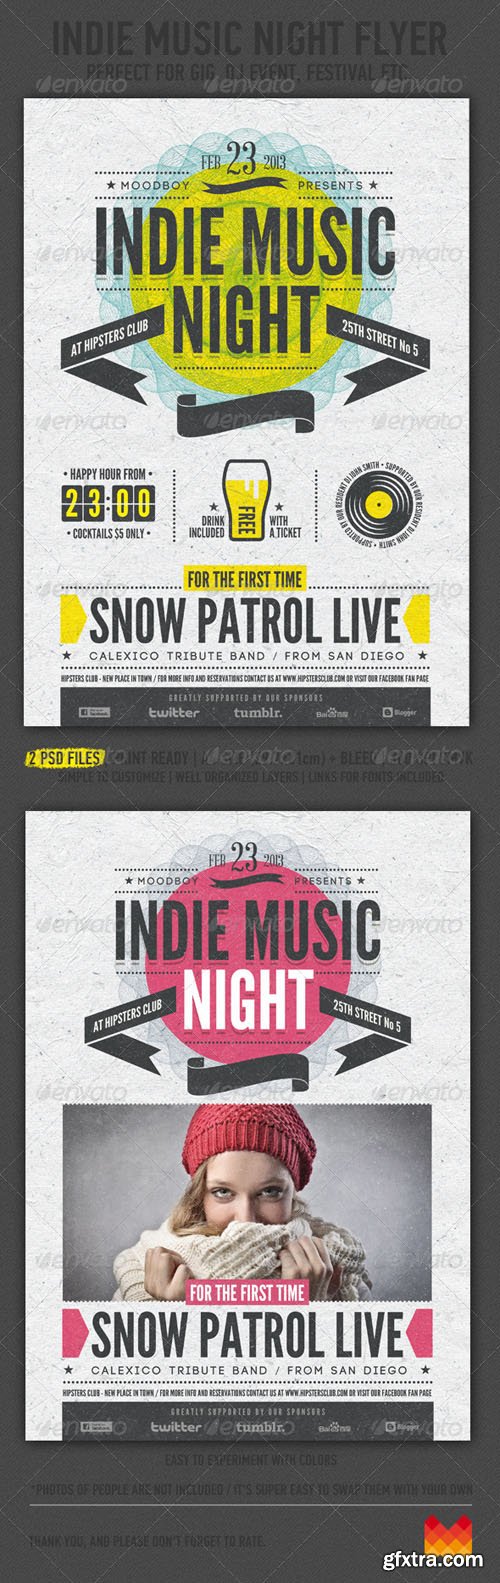 GR - Indie Music Night Flyer / Poster 4123510